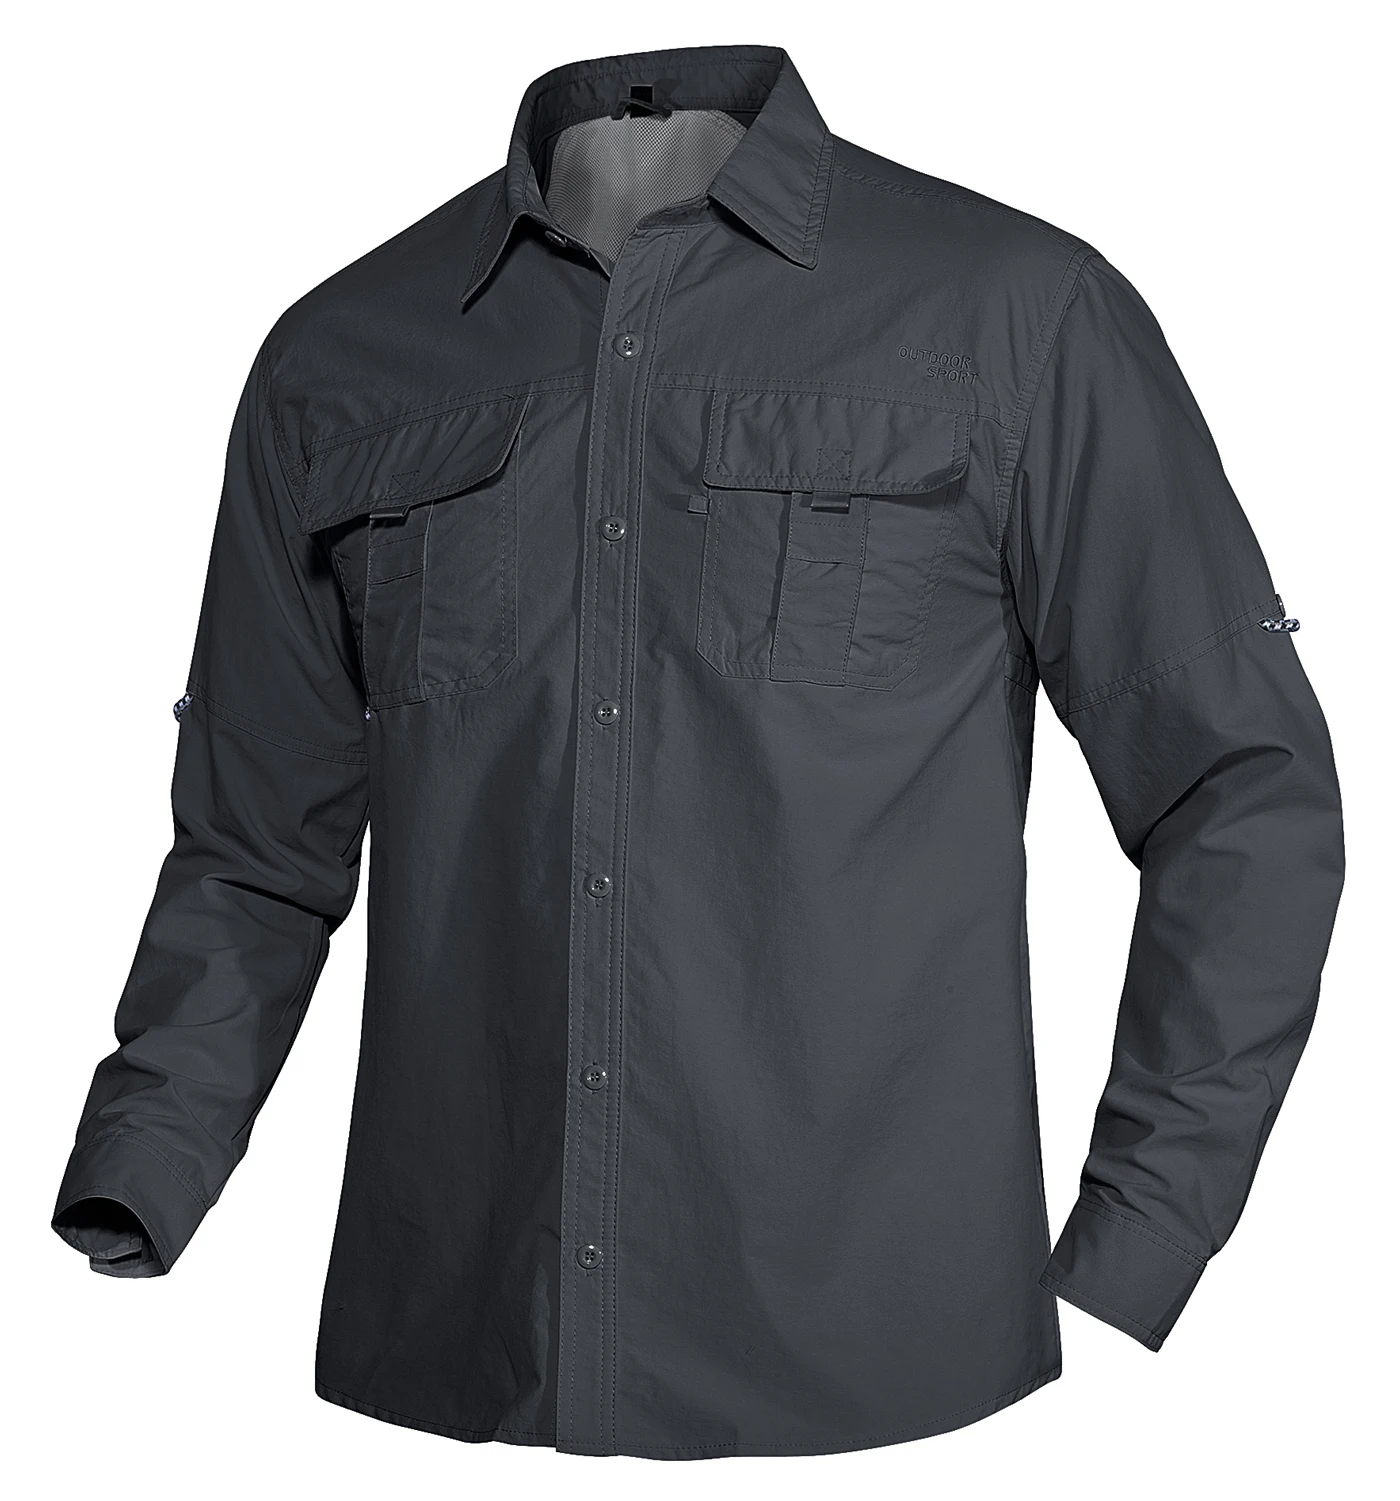 Wholesale Men's Nylon Fishing Shirt Quick Dry Tactical Hiking Shirts Long Sleeve Outdoor Cargo Shirt